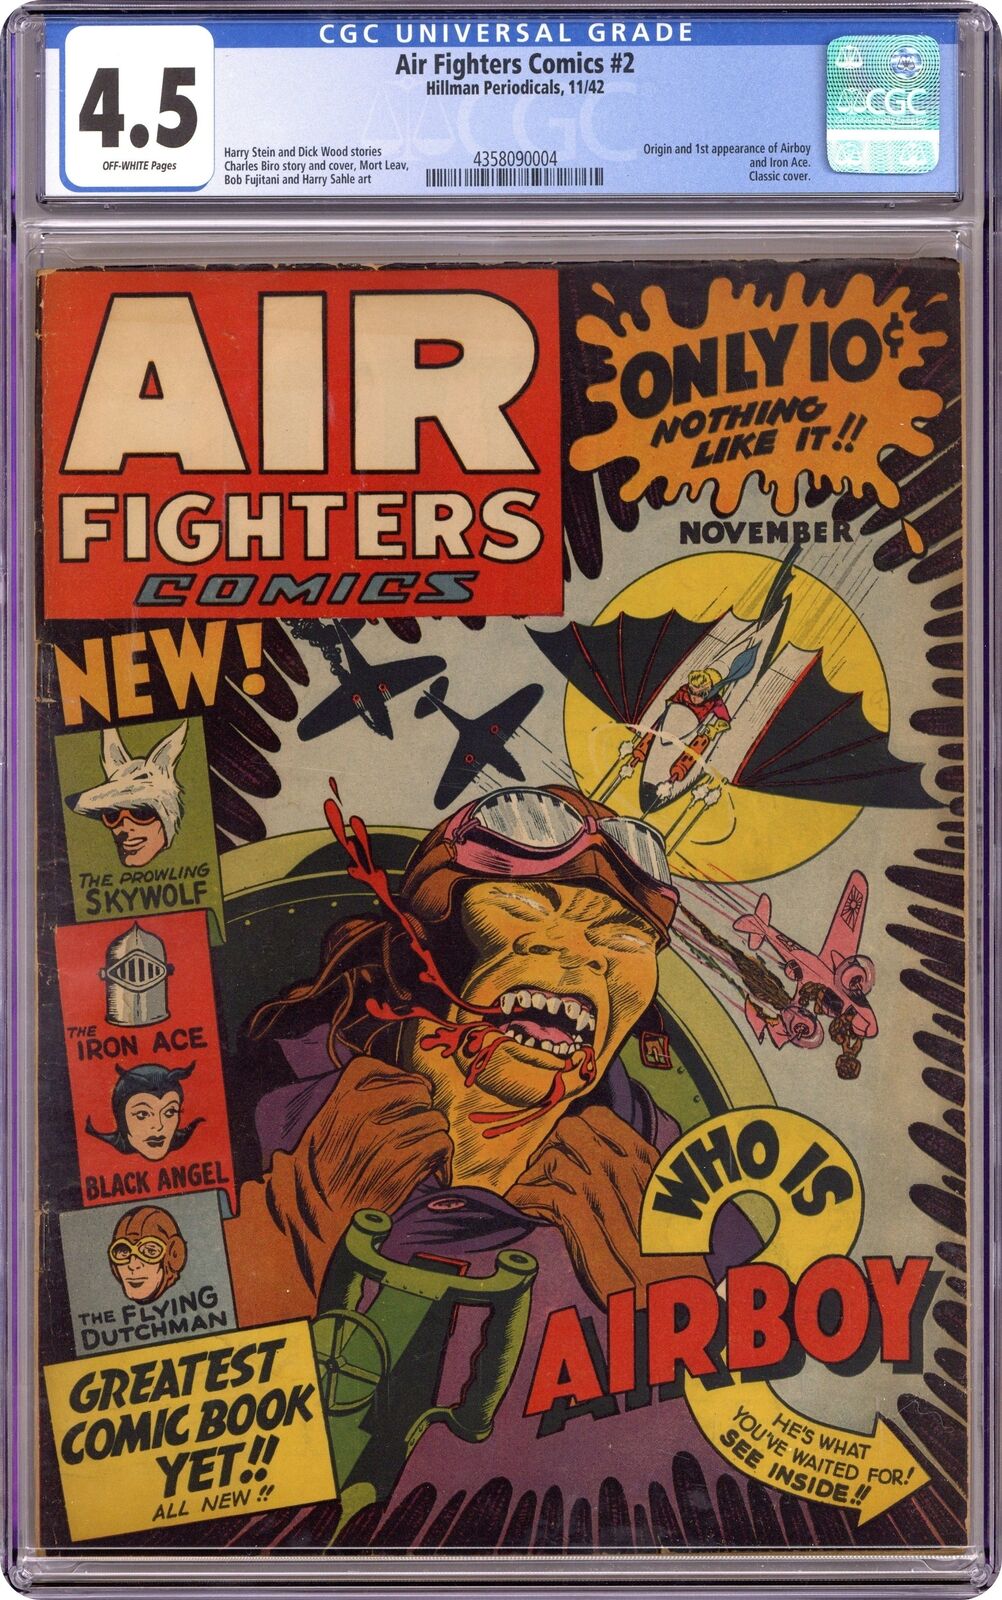 Air Fighters Comics Vol. 1 #2 CGC 4.5 1942 4358090004 1st app. Airboy